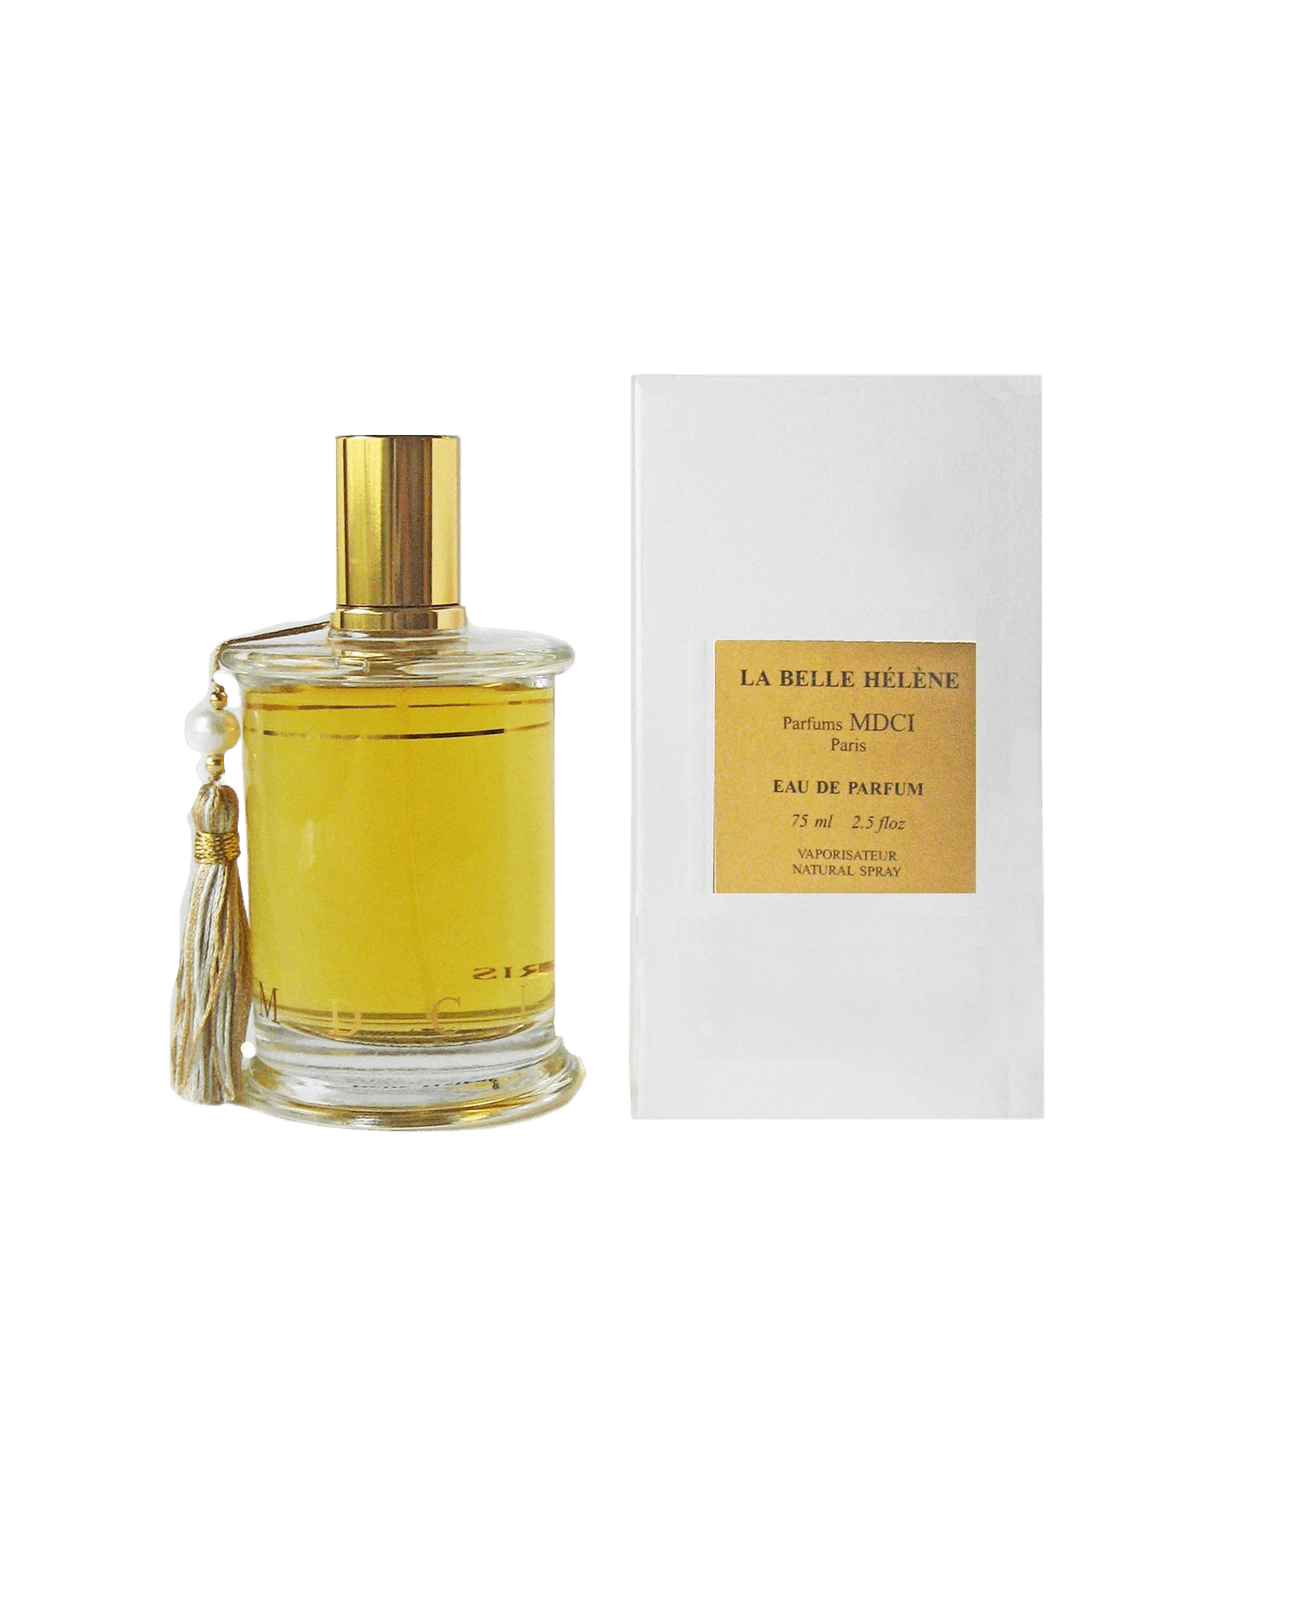 Parfum MDCI La Belle Helene perfume + package | Perfume Lounge